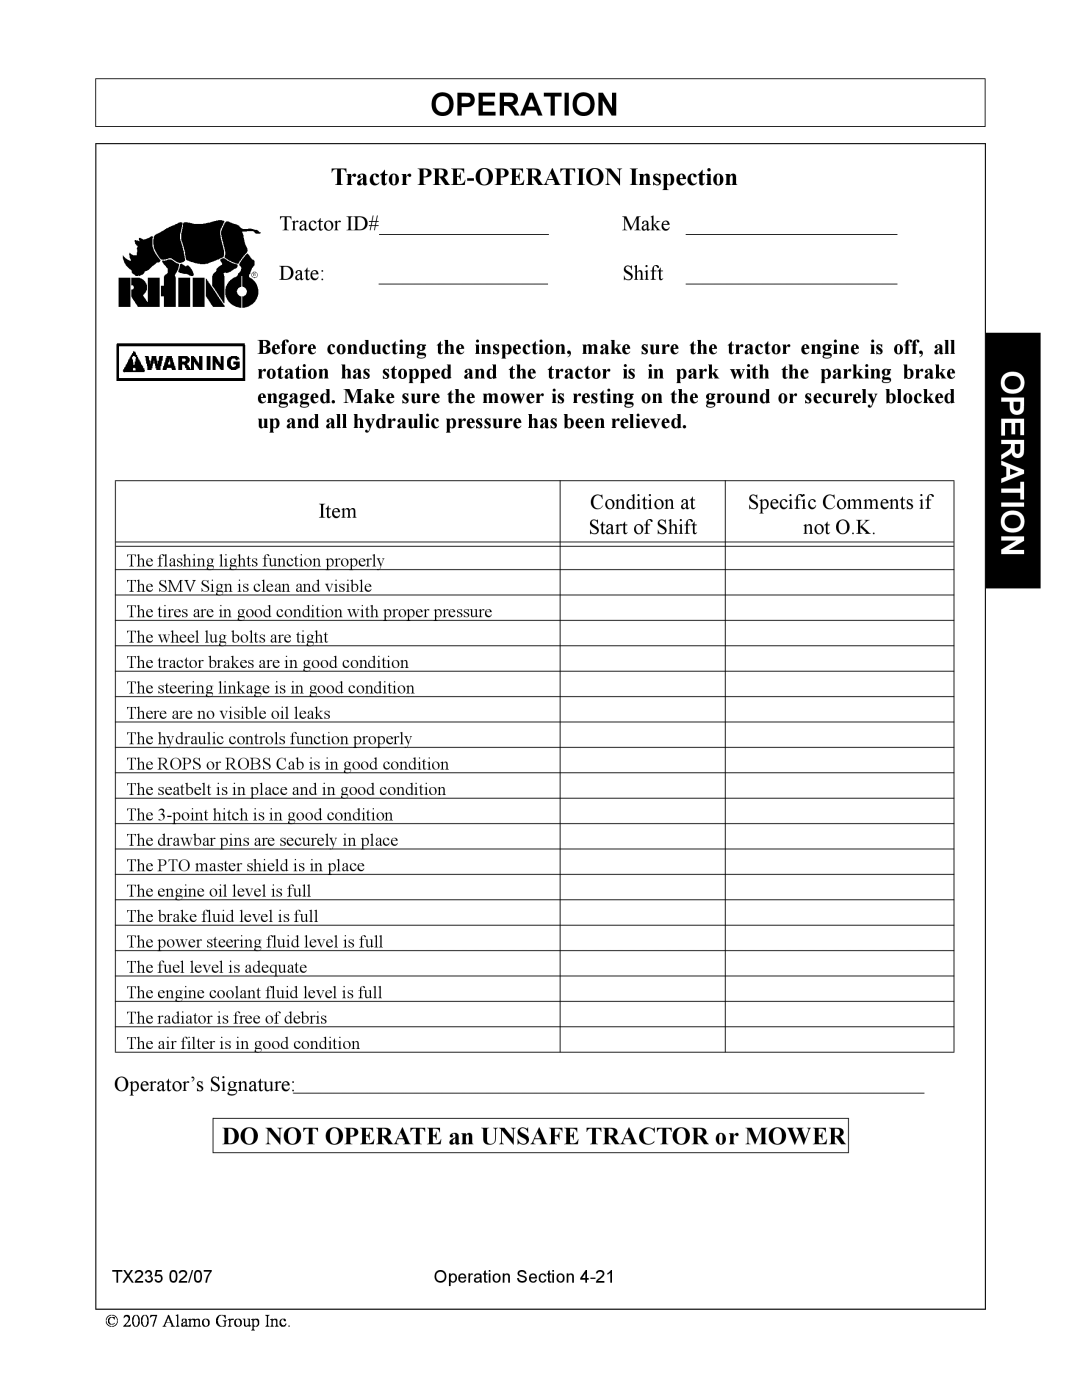 Alamo TX235 manual Tractor PRE-OPERATION Inspection, Operation, DO NOT OPERATE an UNSAFE TRACTOR or MOWER 